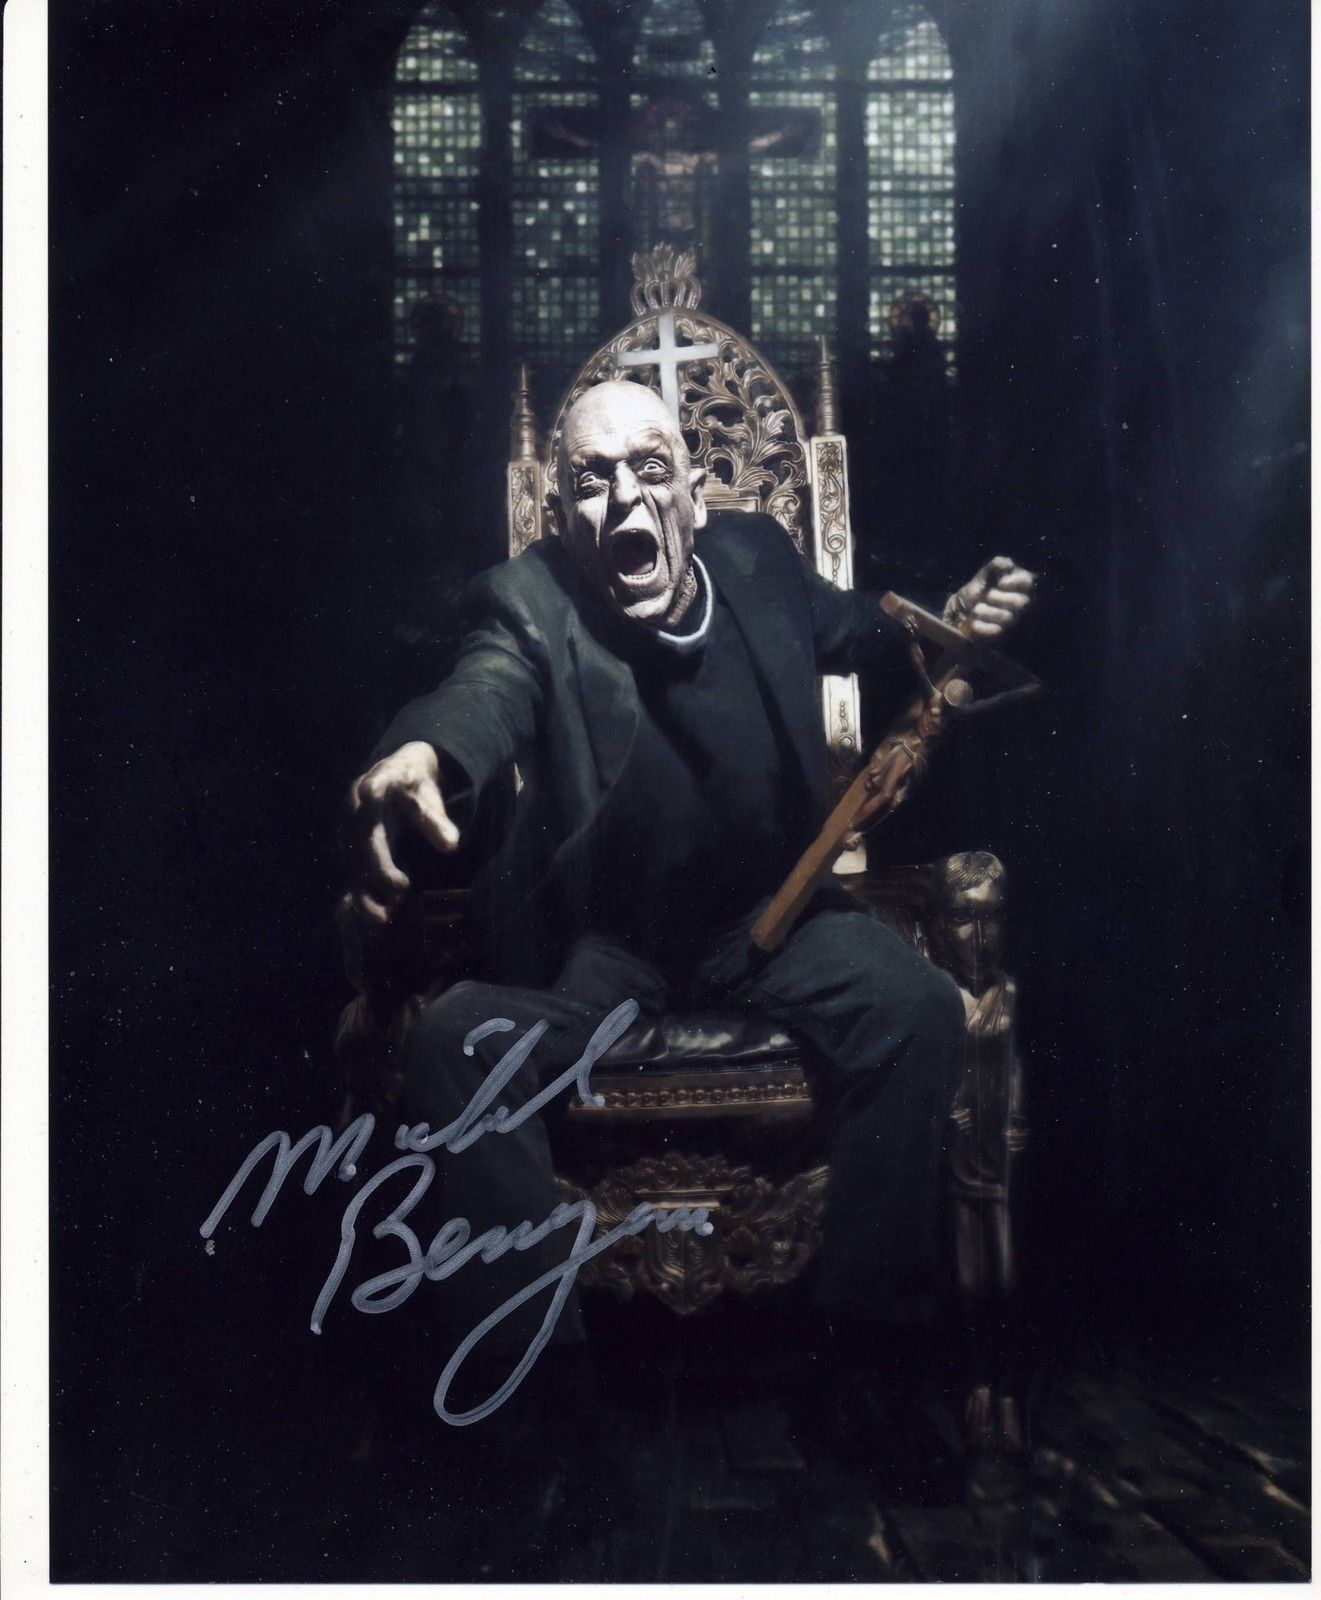 Michael Berryman Autograph Signed 10x8 Photo Poster painting AFTAL [6506]